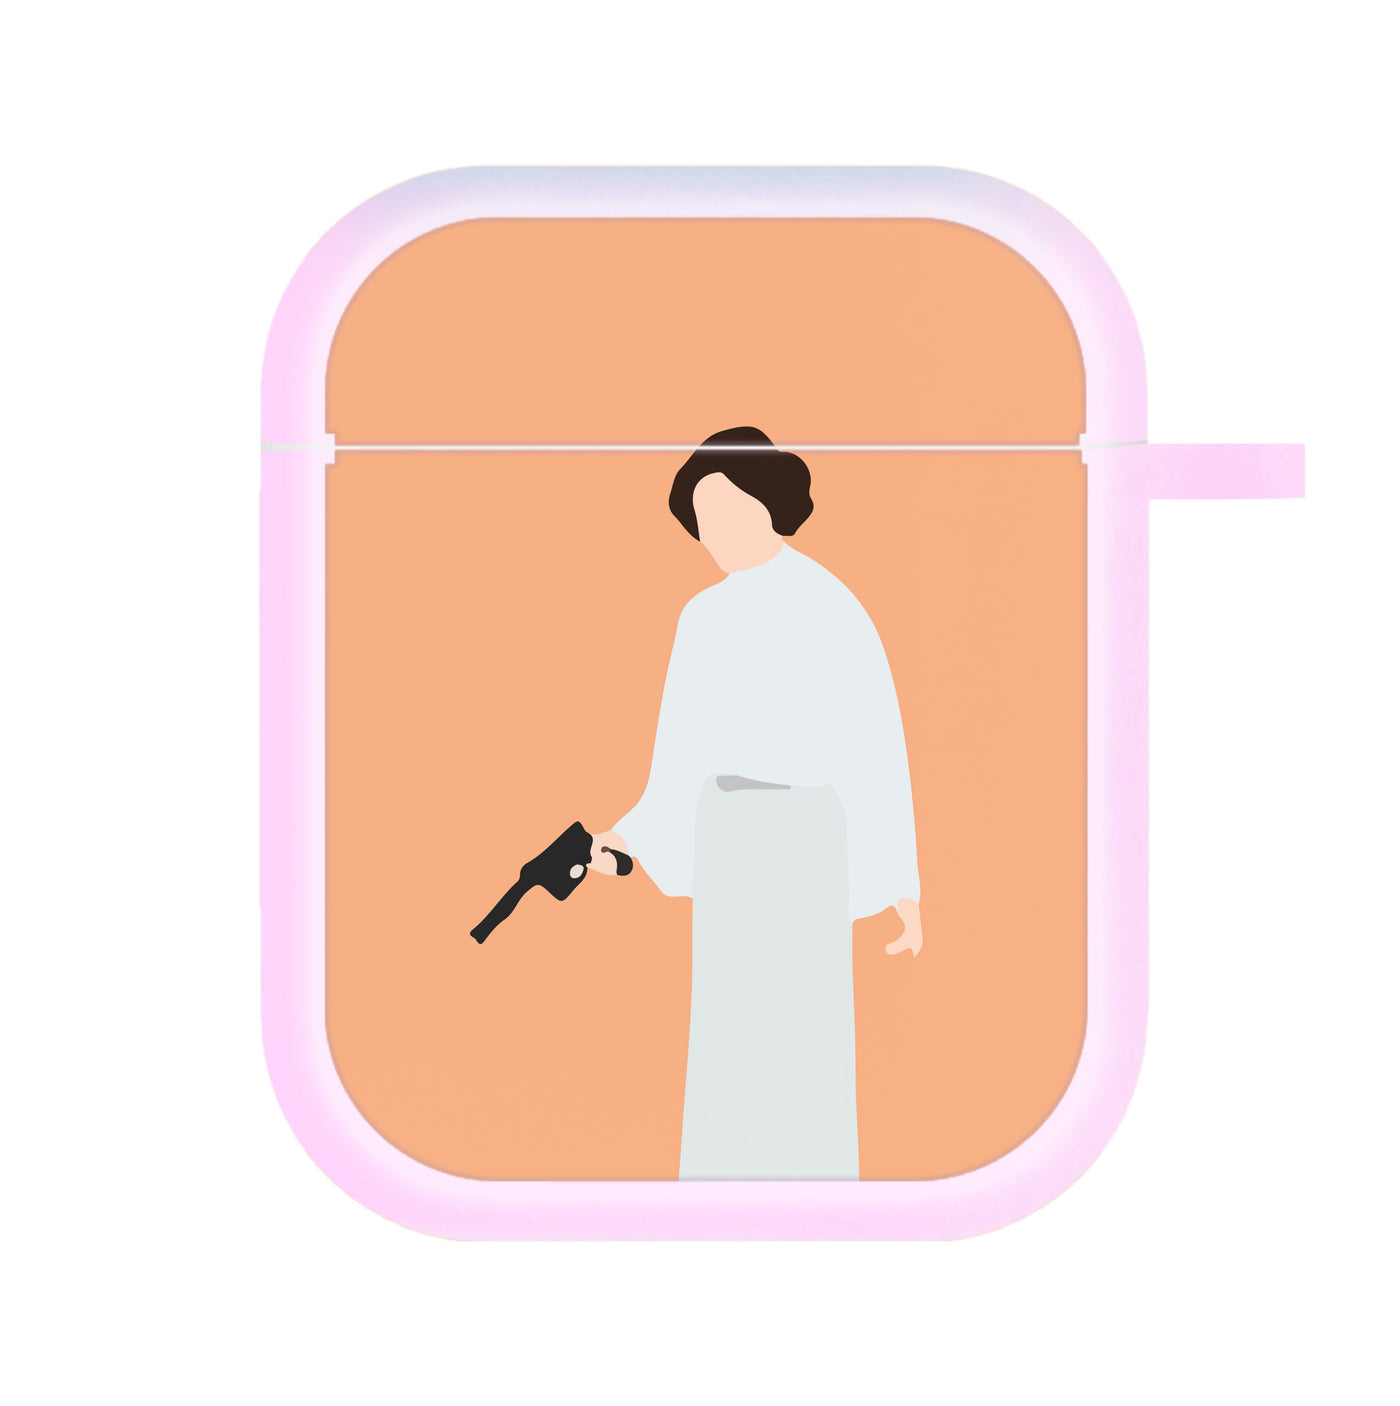 Princess Leia Faceless With Gun - Star Wars AirPods Case